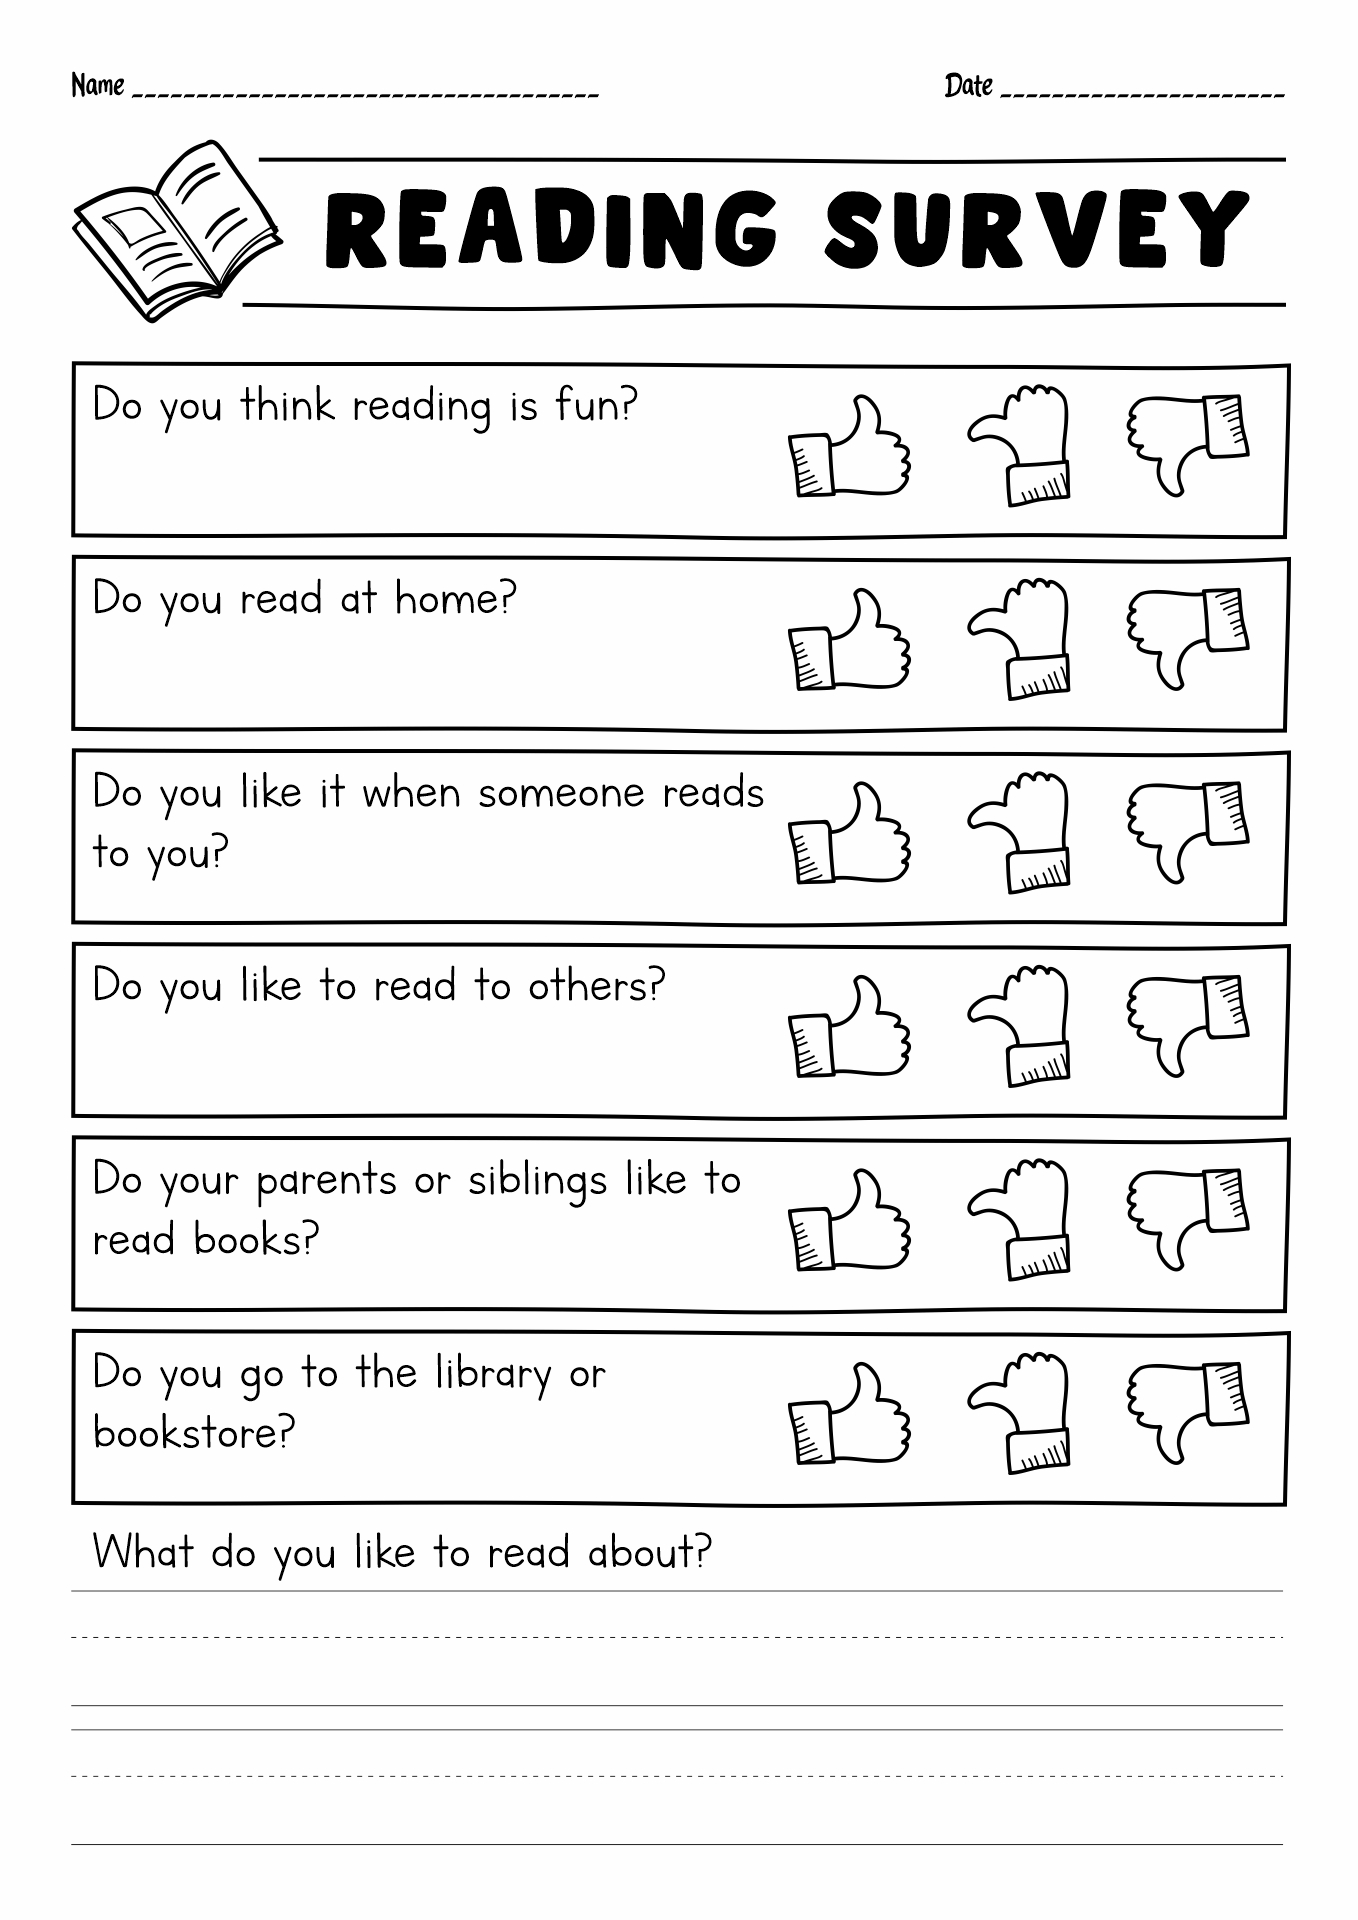 Student Reading Interest Survey Image